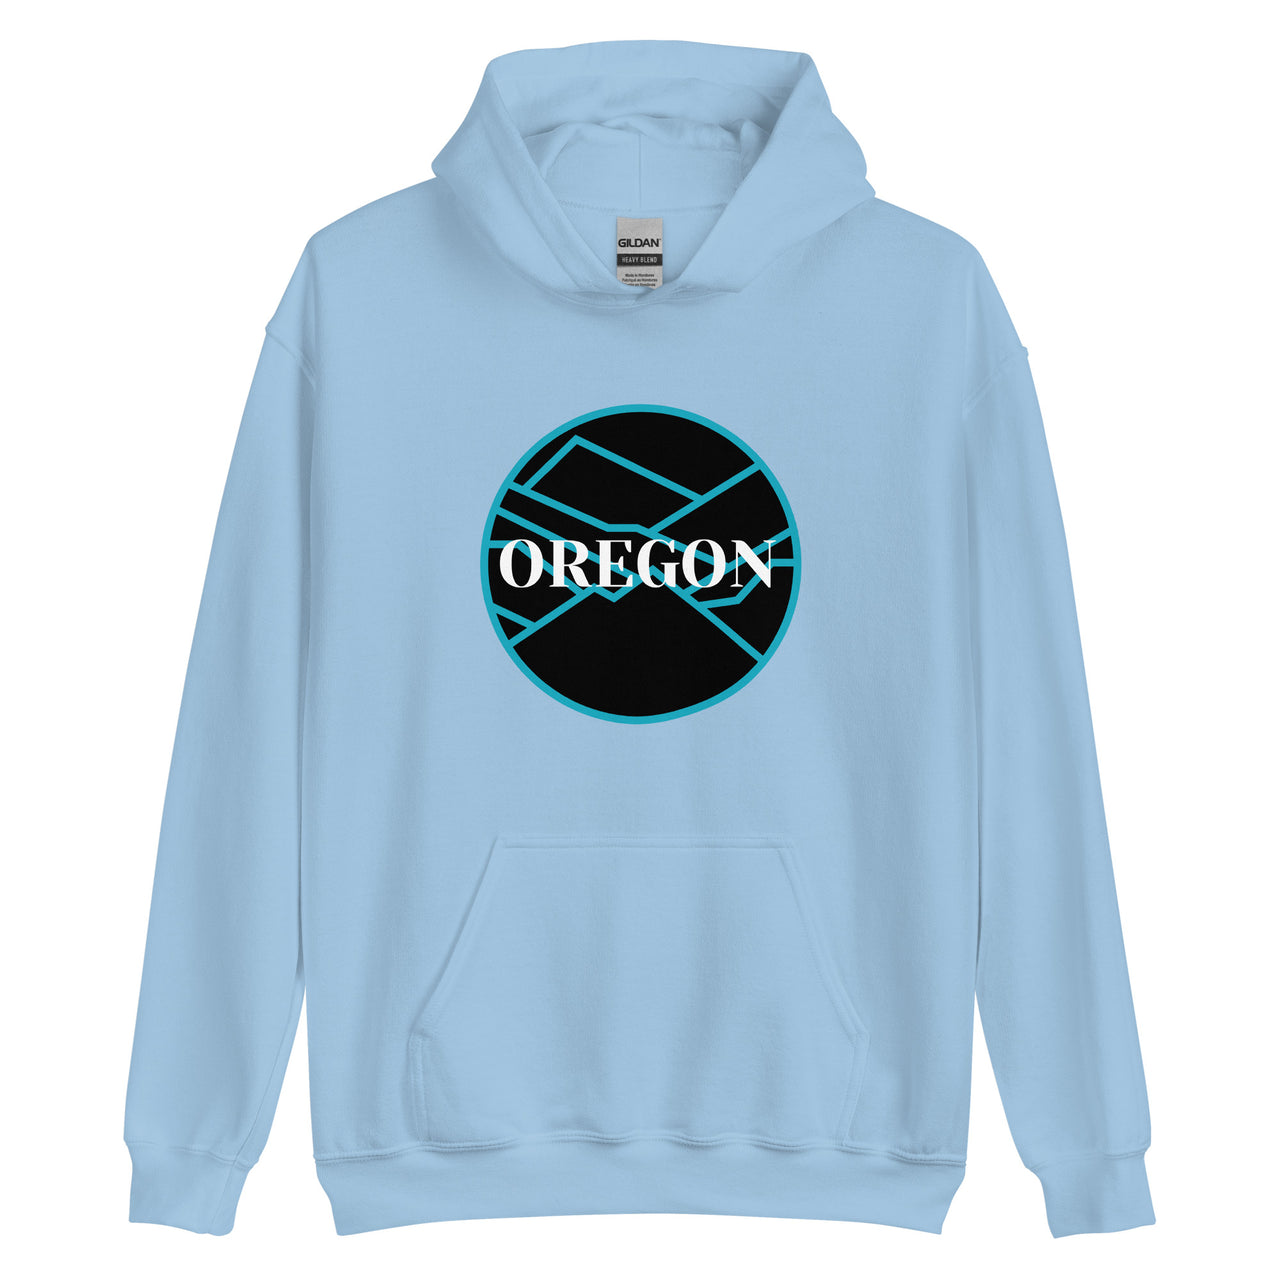 OREGON - Blue/Black - Unisex Hoodie